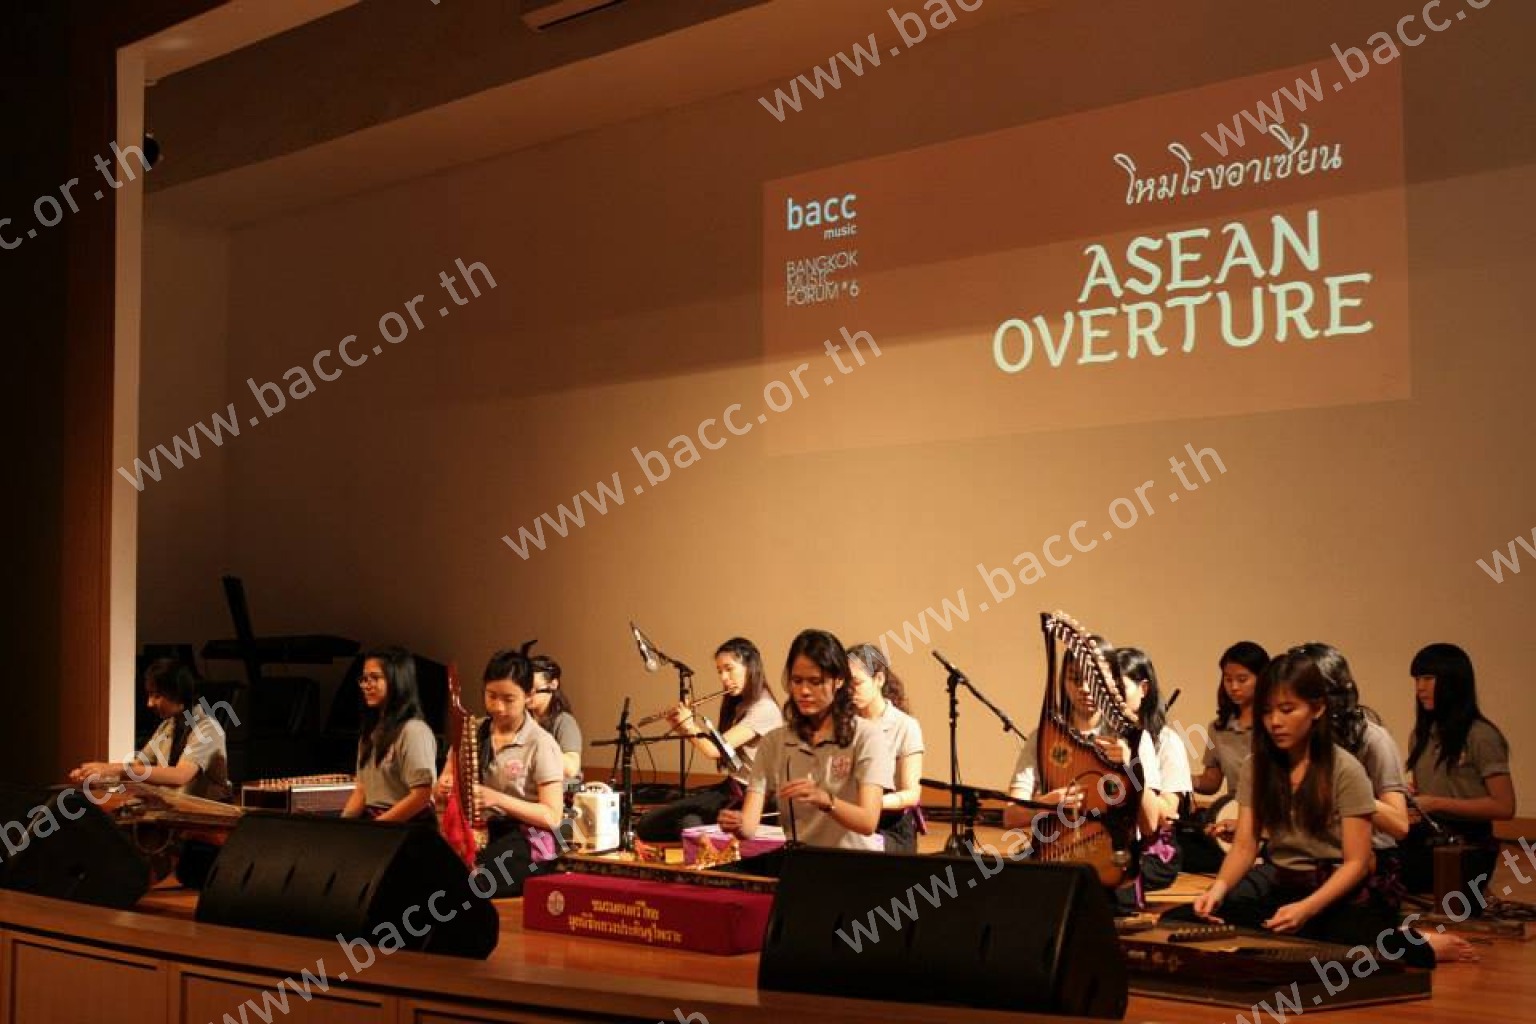 The 6th Bangkok Music Forum “ASEAN Overture”